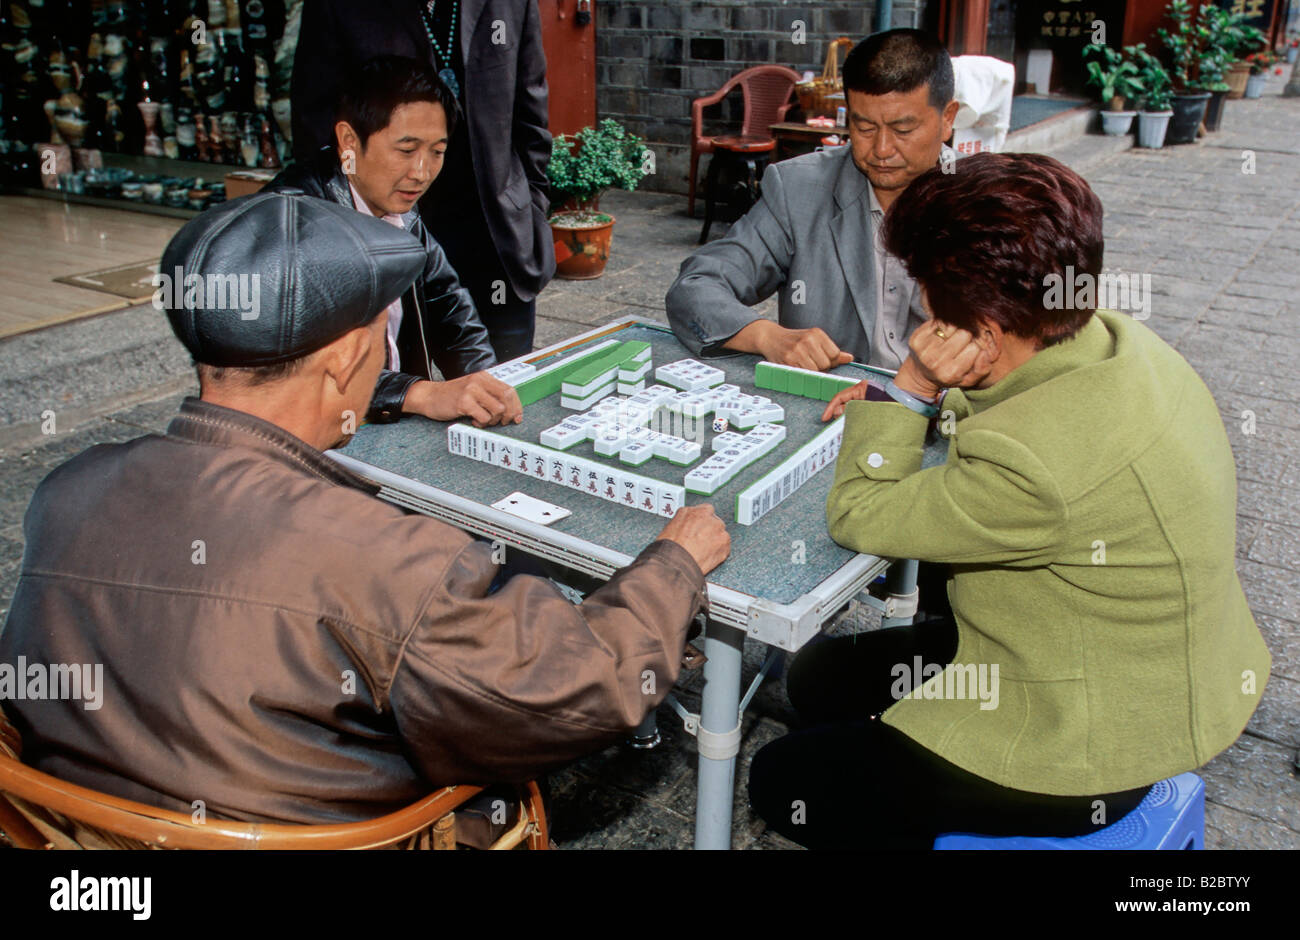 Foto de Mahjong Jogo e mais fotos de stock de Mah-jong - Mah-jong, Cultura  Chinesa, Ninguém - iStock